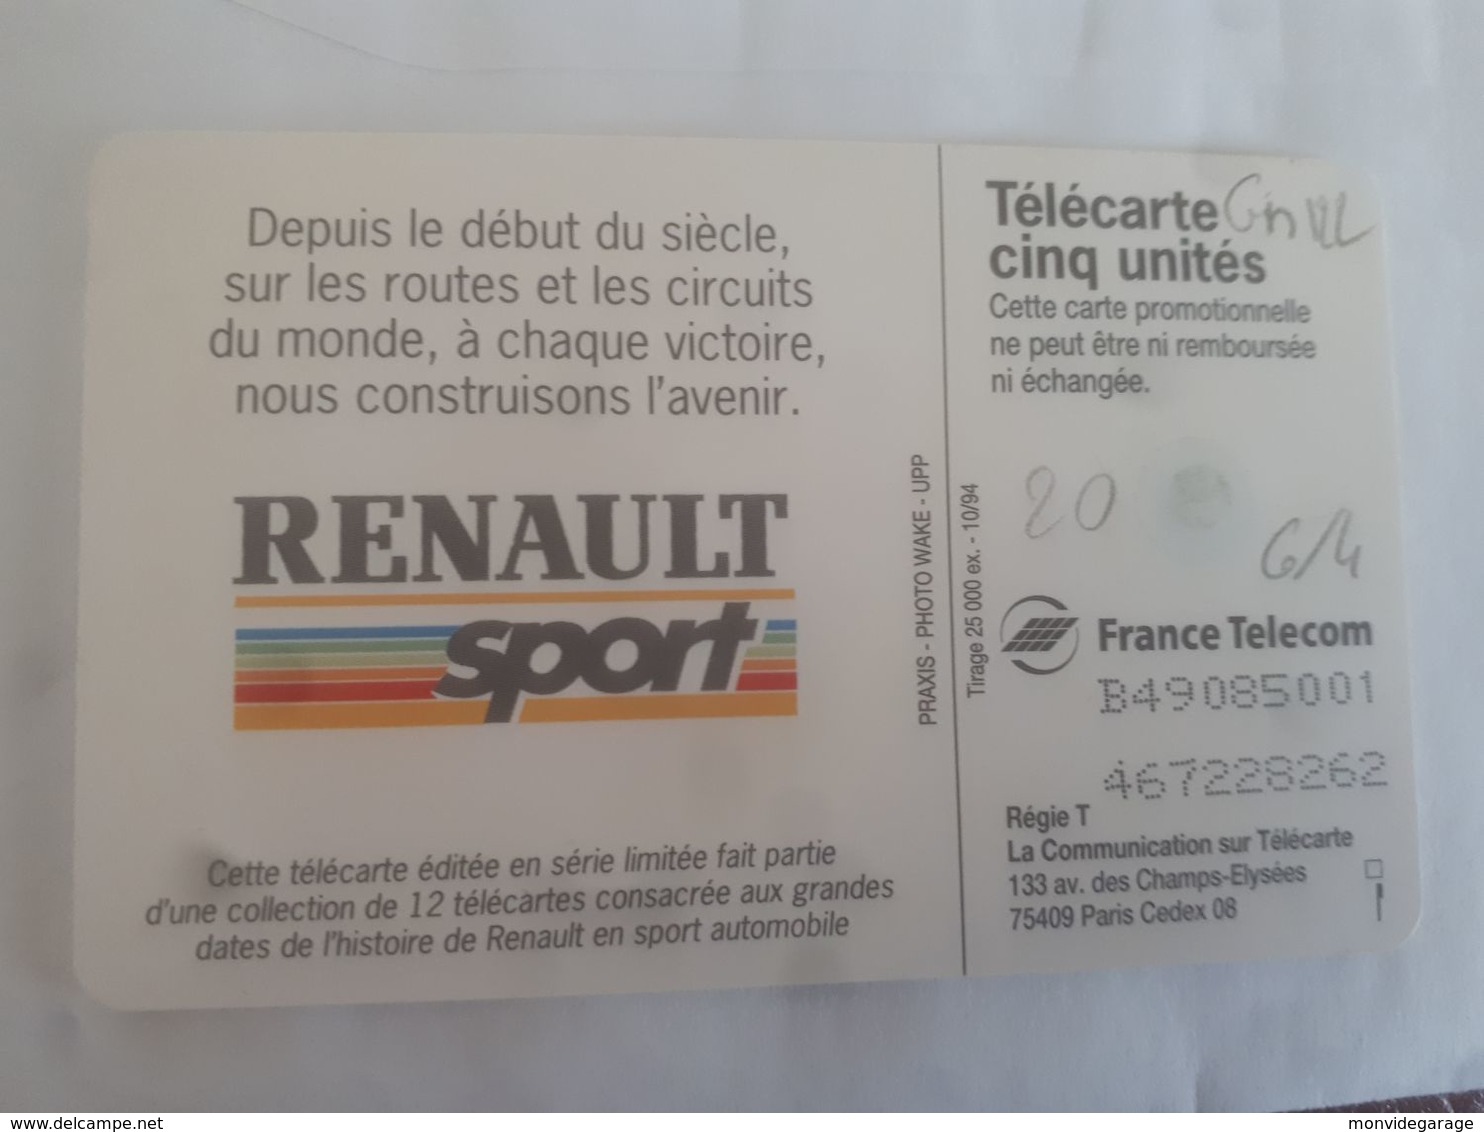 Gn 122 - Renault 1989 - Fehldrucke